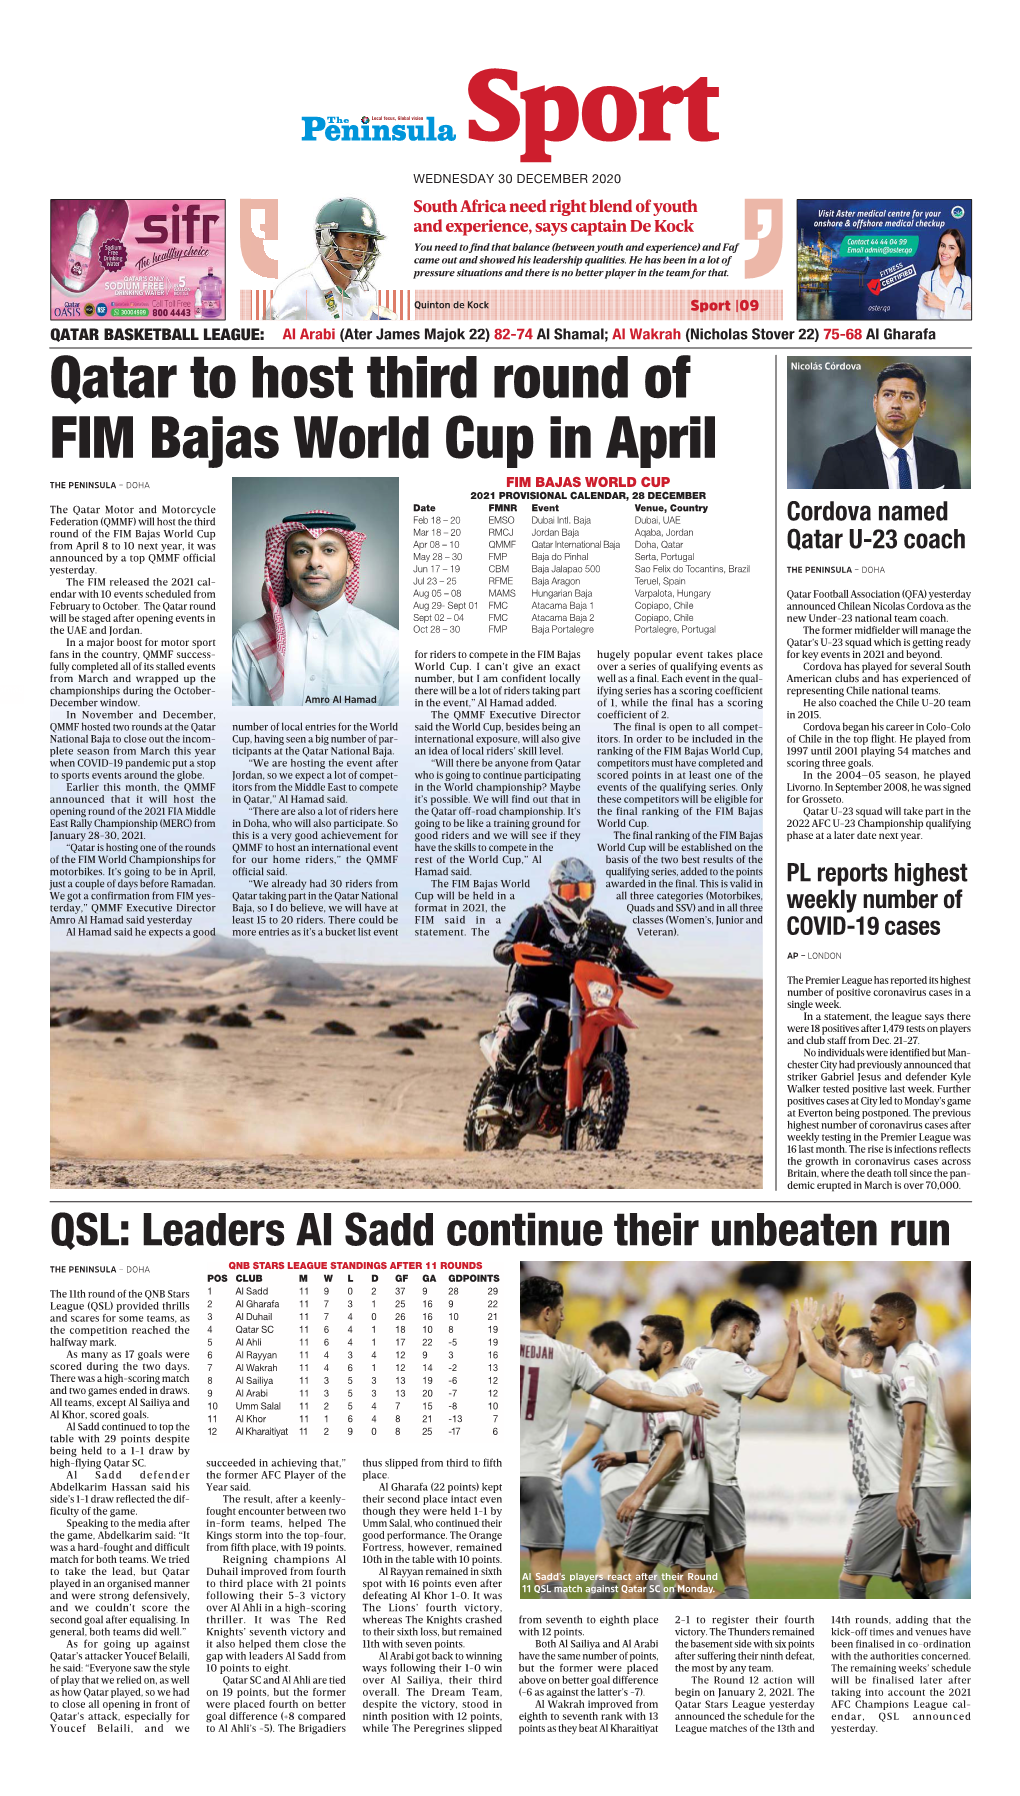 Qatar to Host Third Round of FIM Bajas World Cup in April